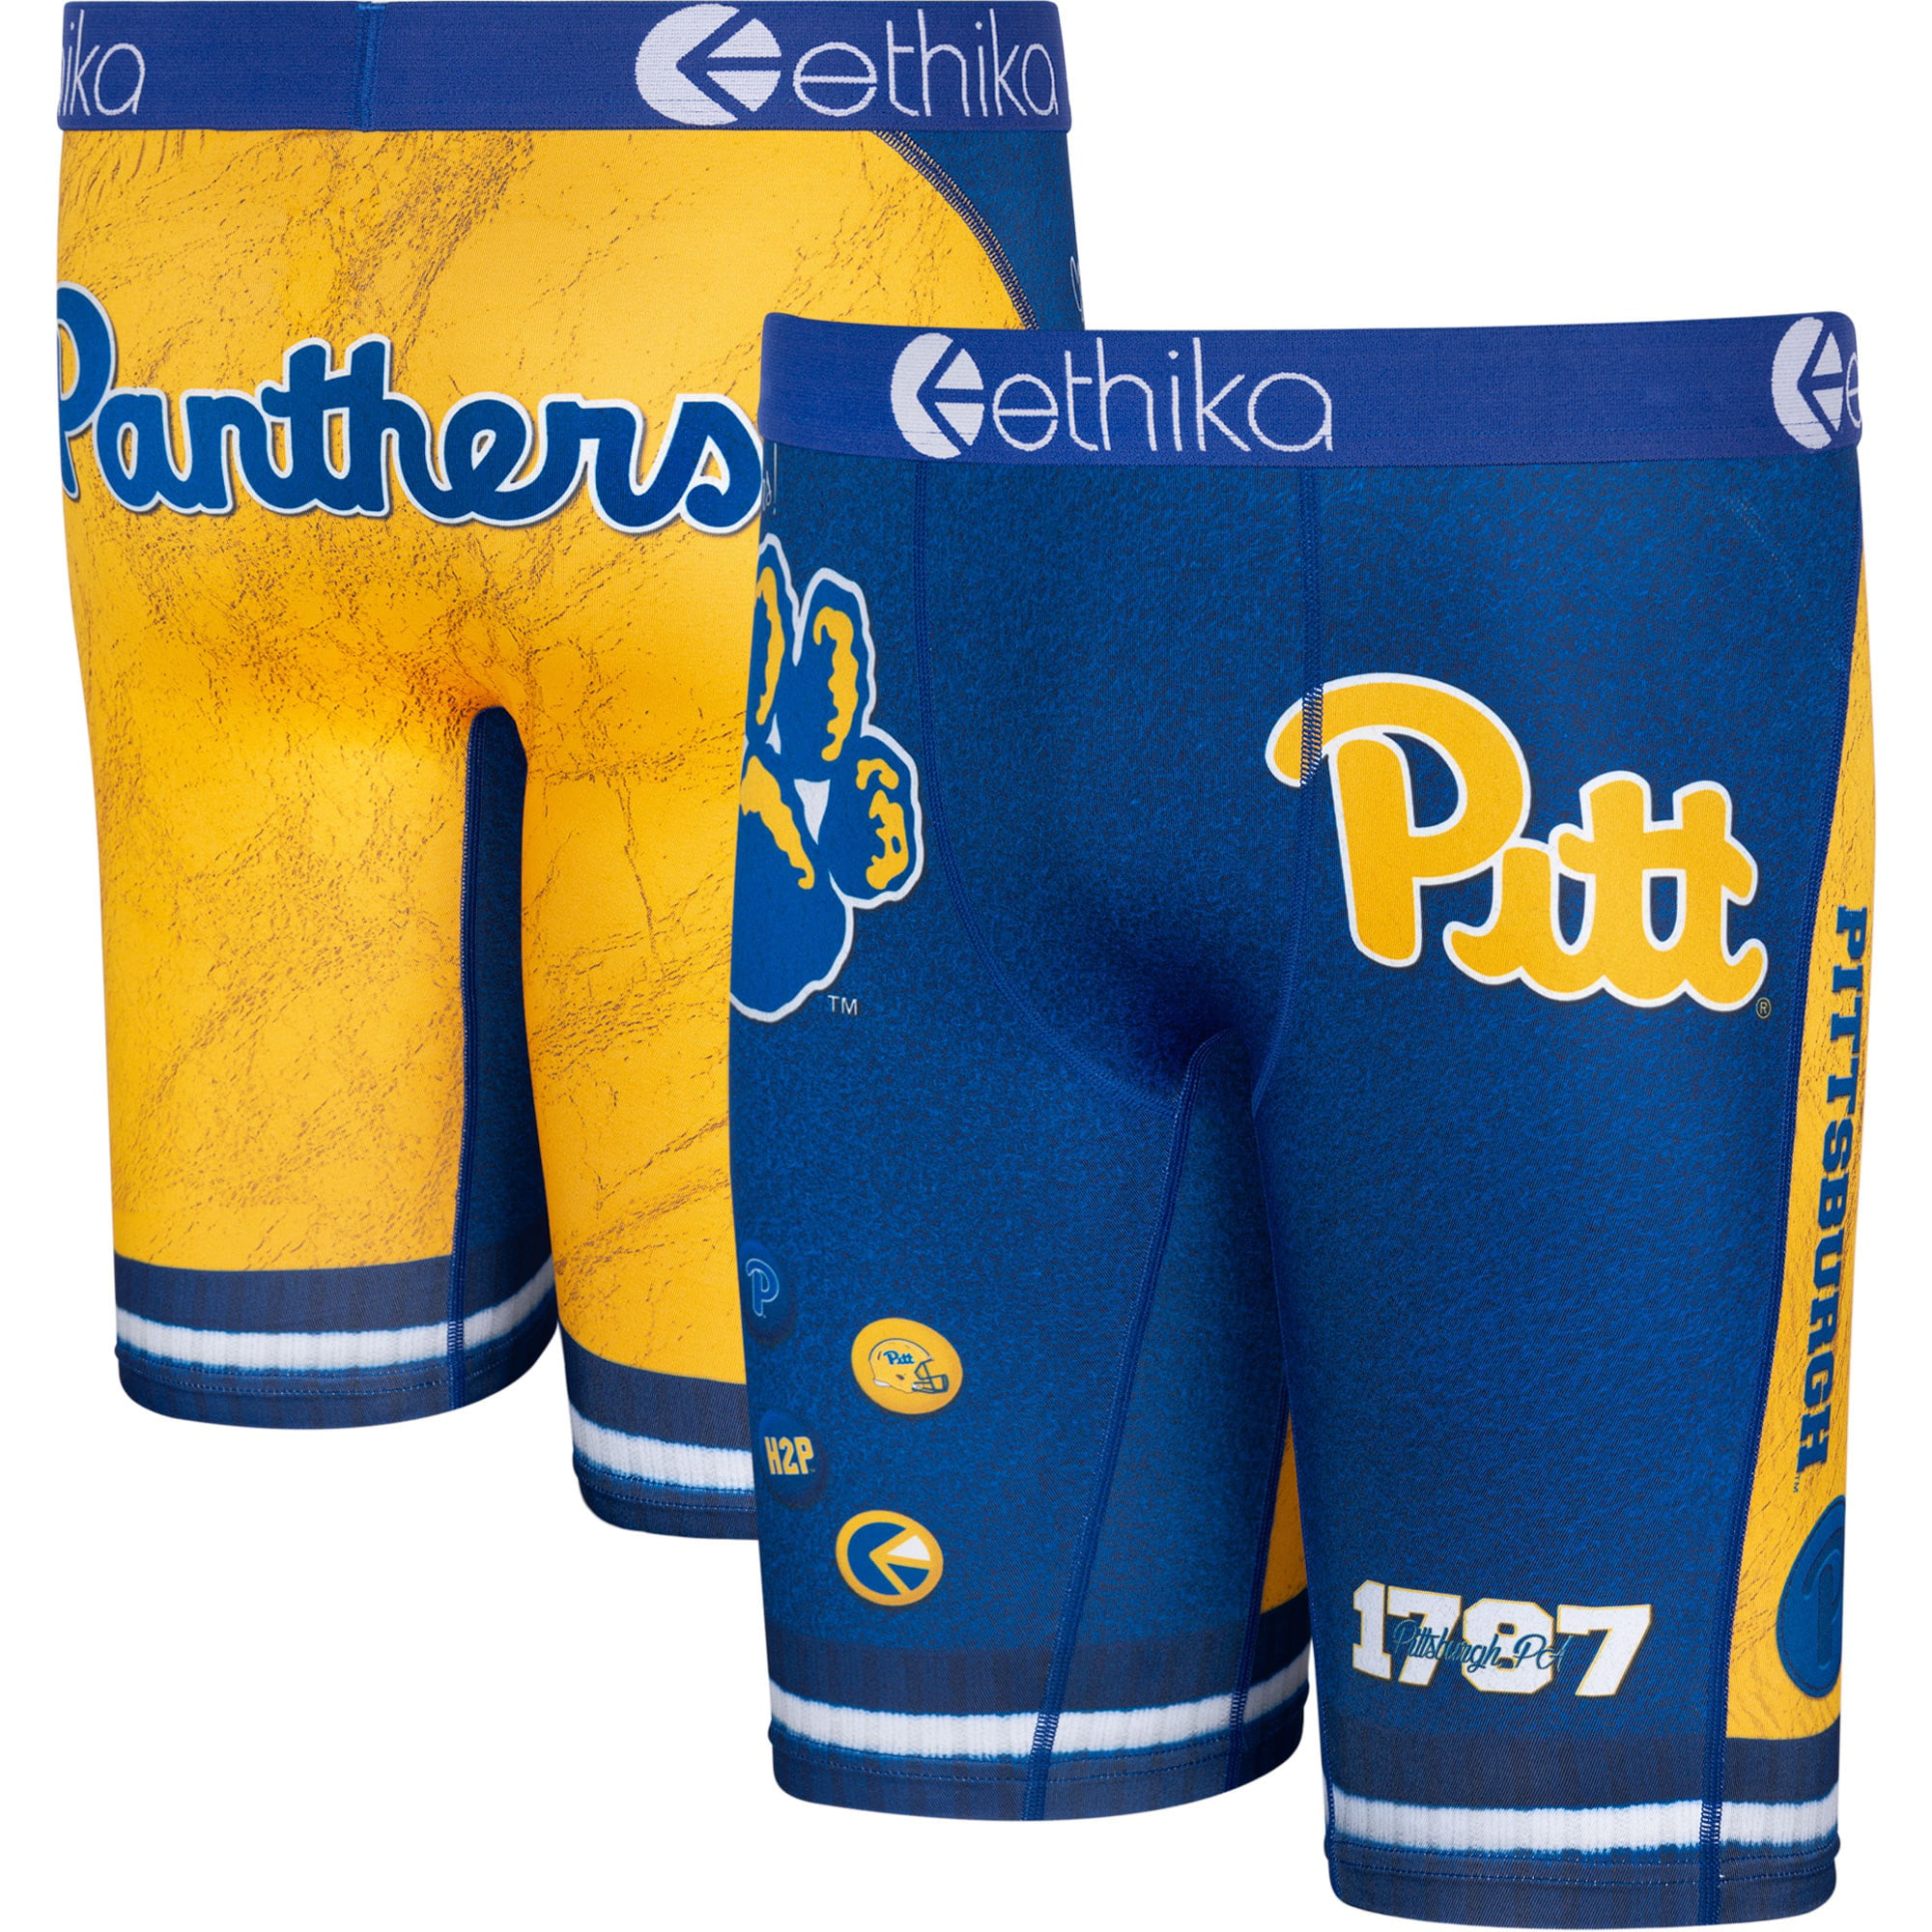 Ethika Tokyo Print Mens/Women Underwear Boxer Briefs Sports Pants US Size S-2XL